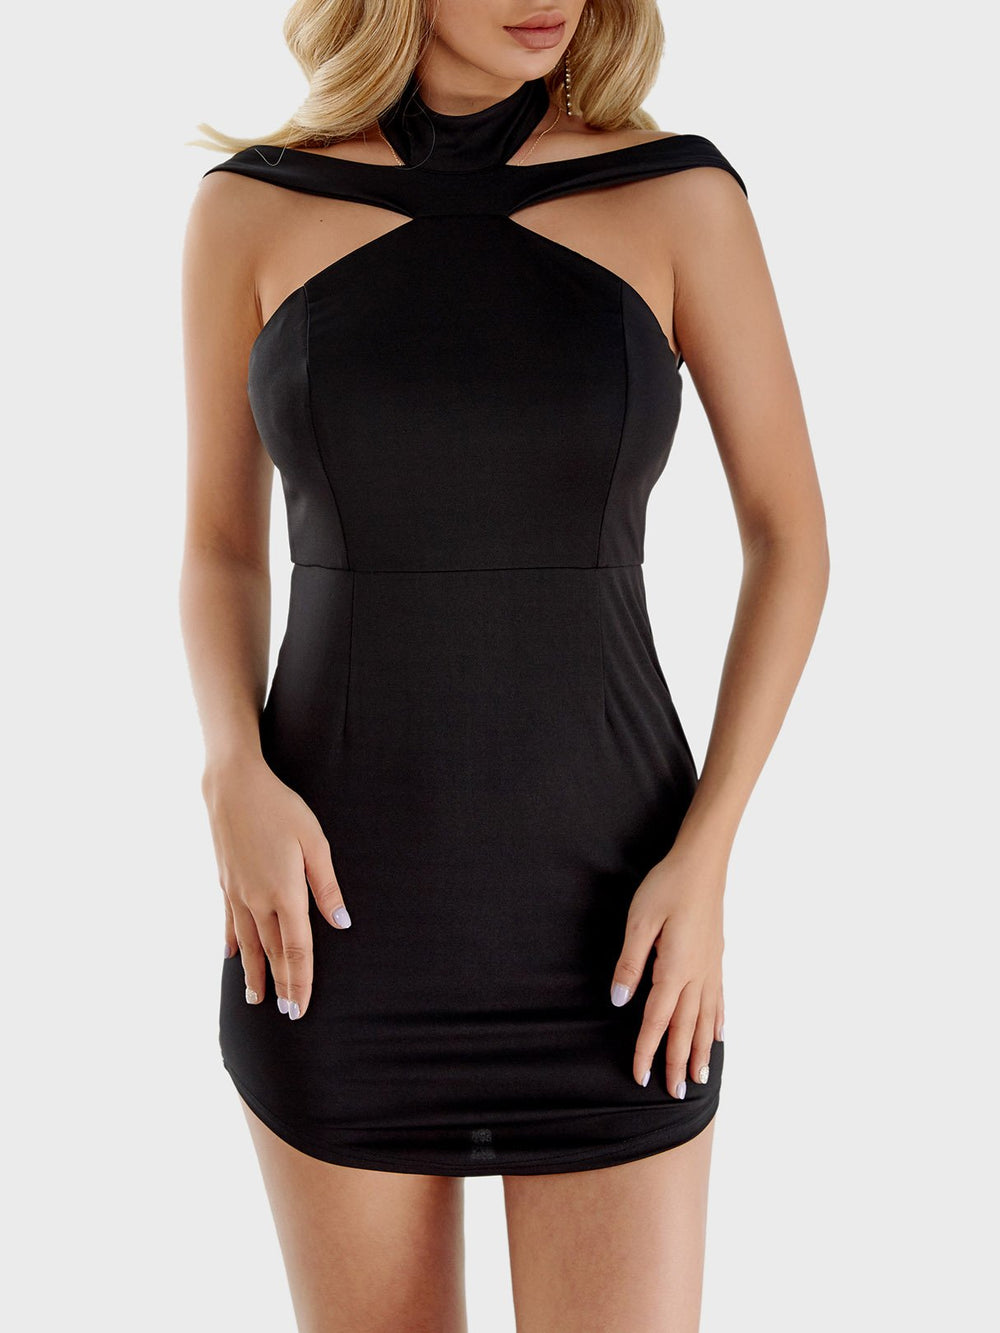 Halter Plain Zip Back Backless Cut Out Curved Hem Black Mini Dress